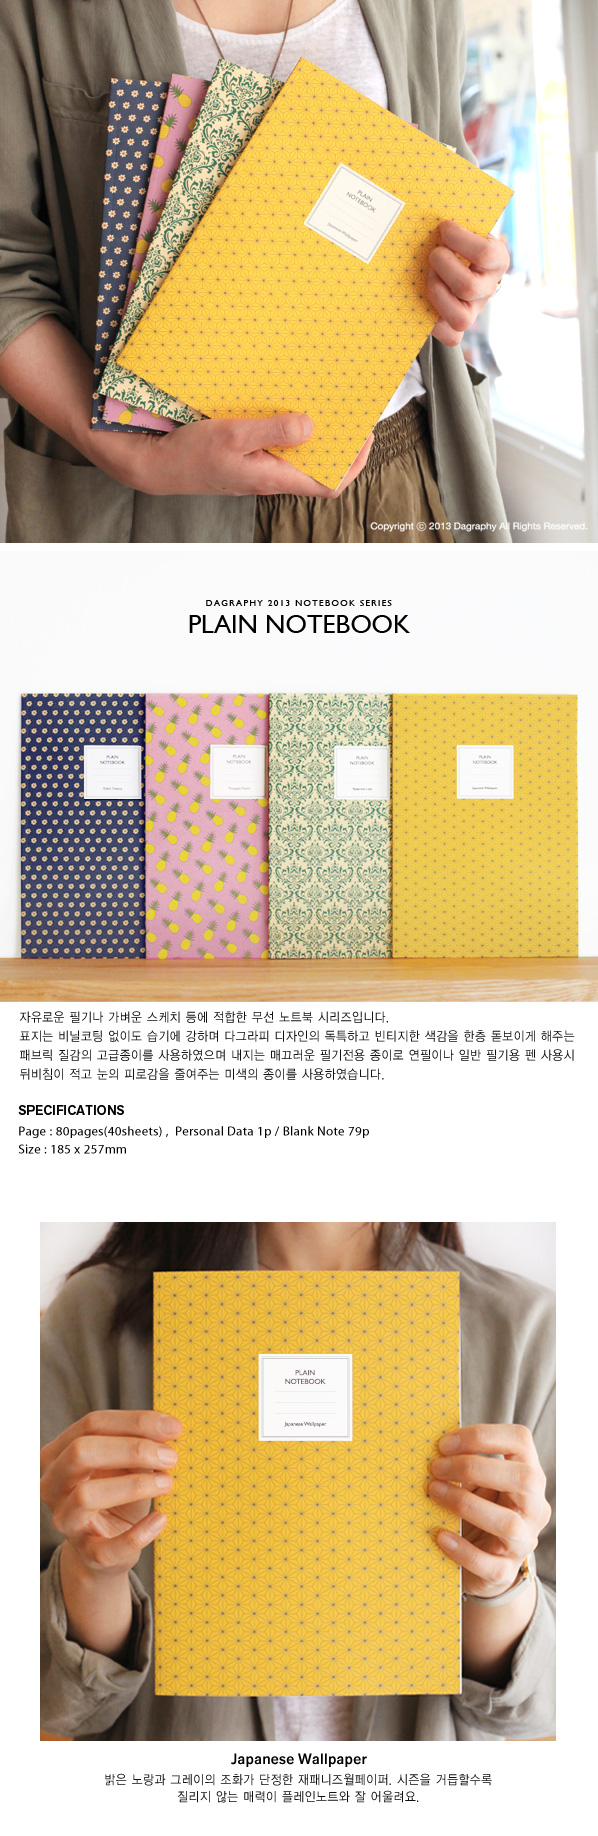 Plain Notebook(Dagraphy) 3,500원 - 다그라피 디자인문구, 노트/메모, 베이직노트, 무선노트 바보사랑 Plain Notebook(Dagraphy) 3,500원 - 다그라피 디자인문구, 노트/메모, 베이직노트, 무선노트 바보사랑